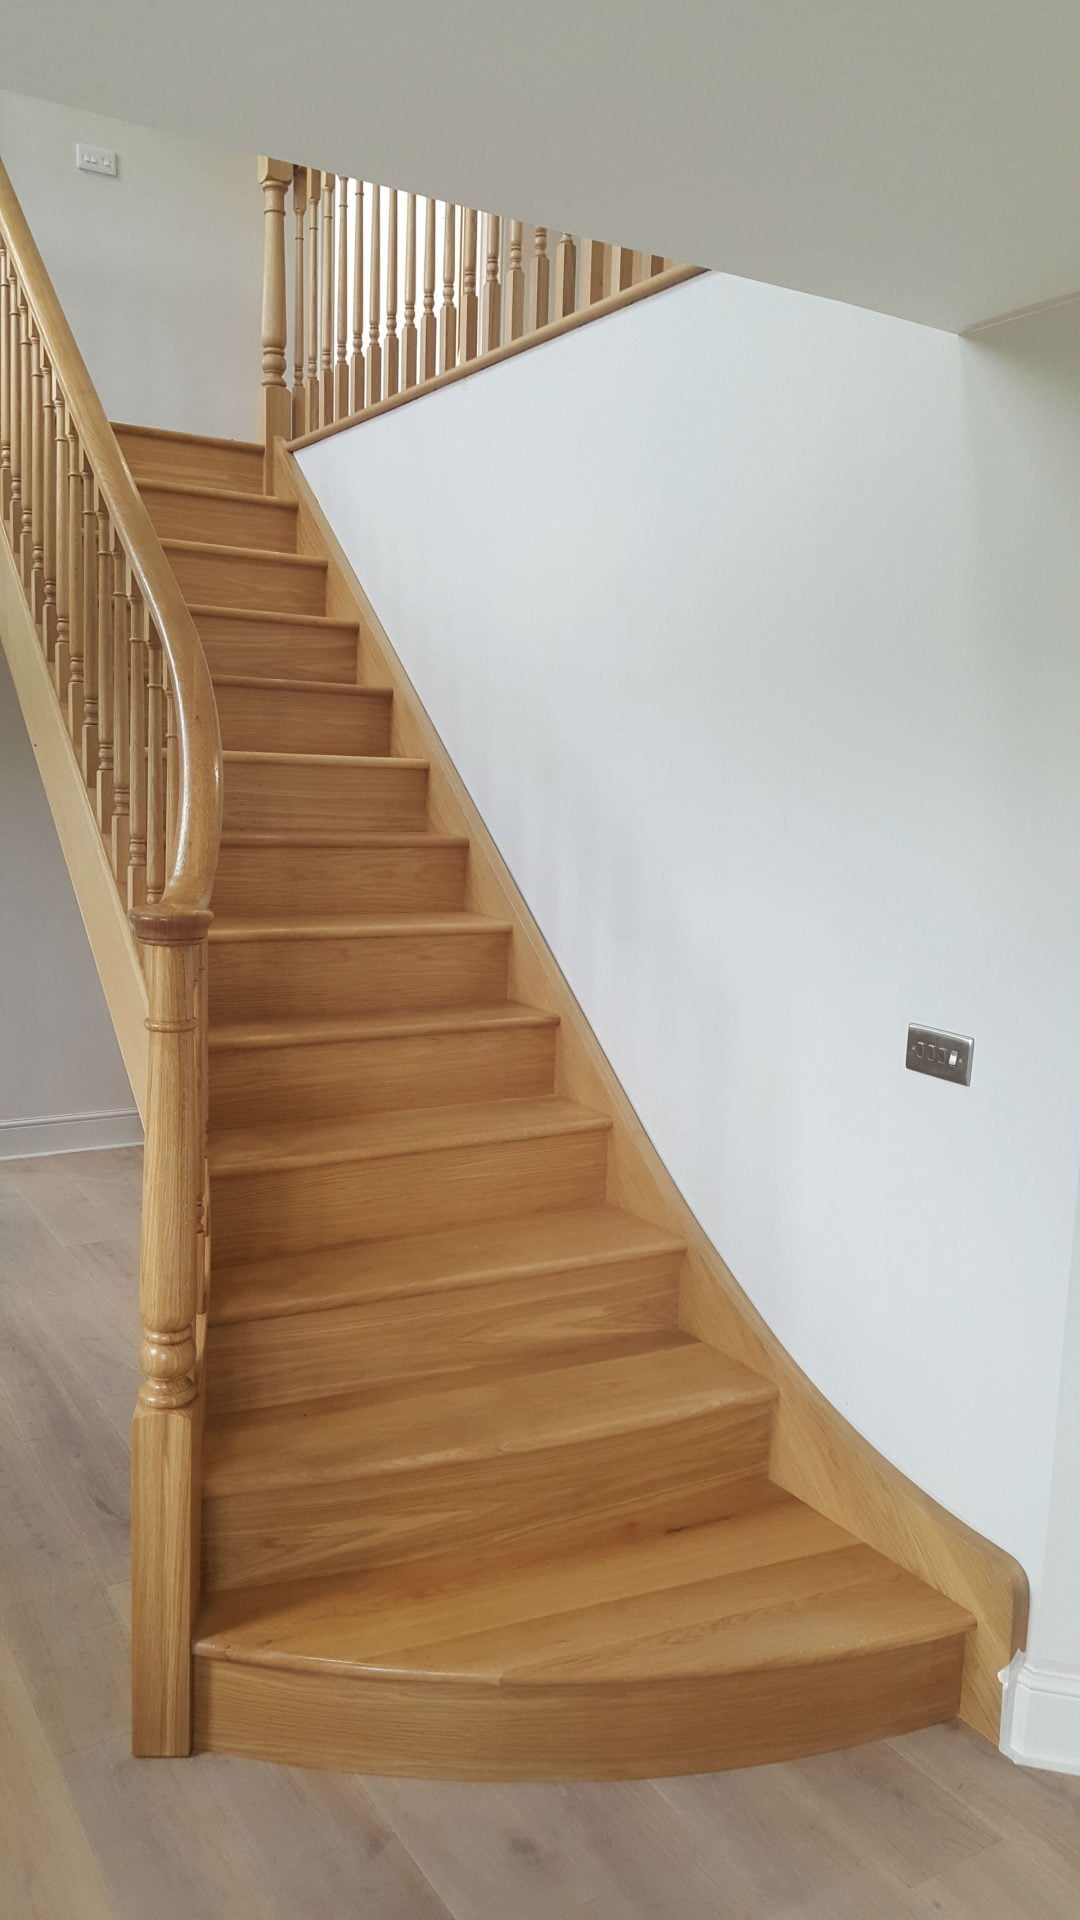 Bespoke curved oak staircase